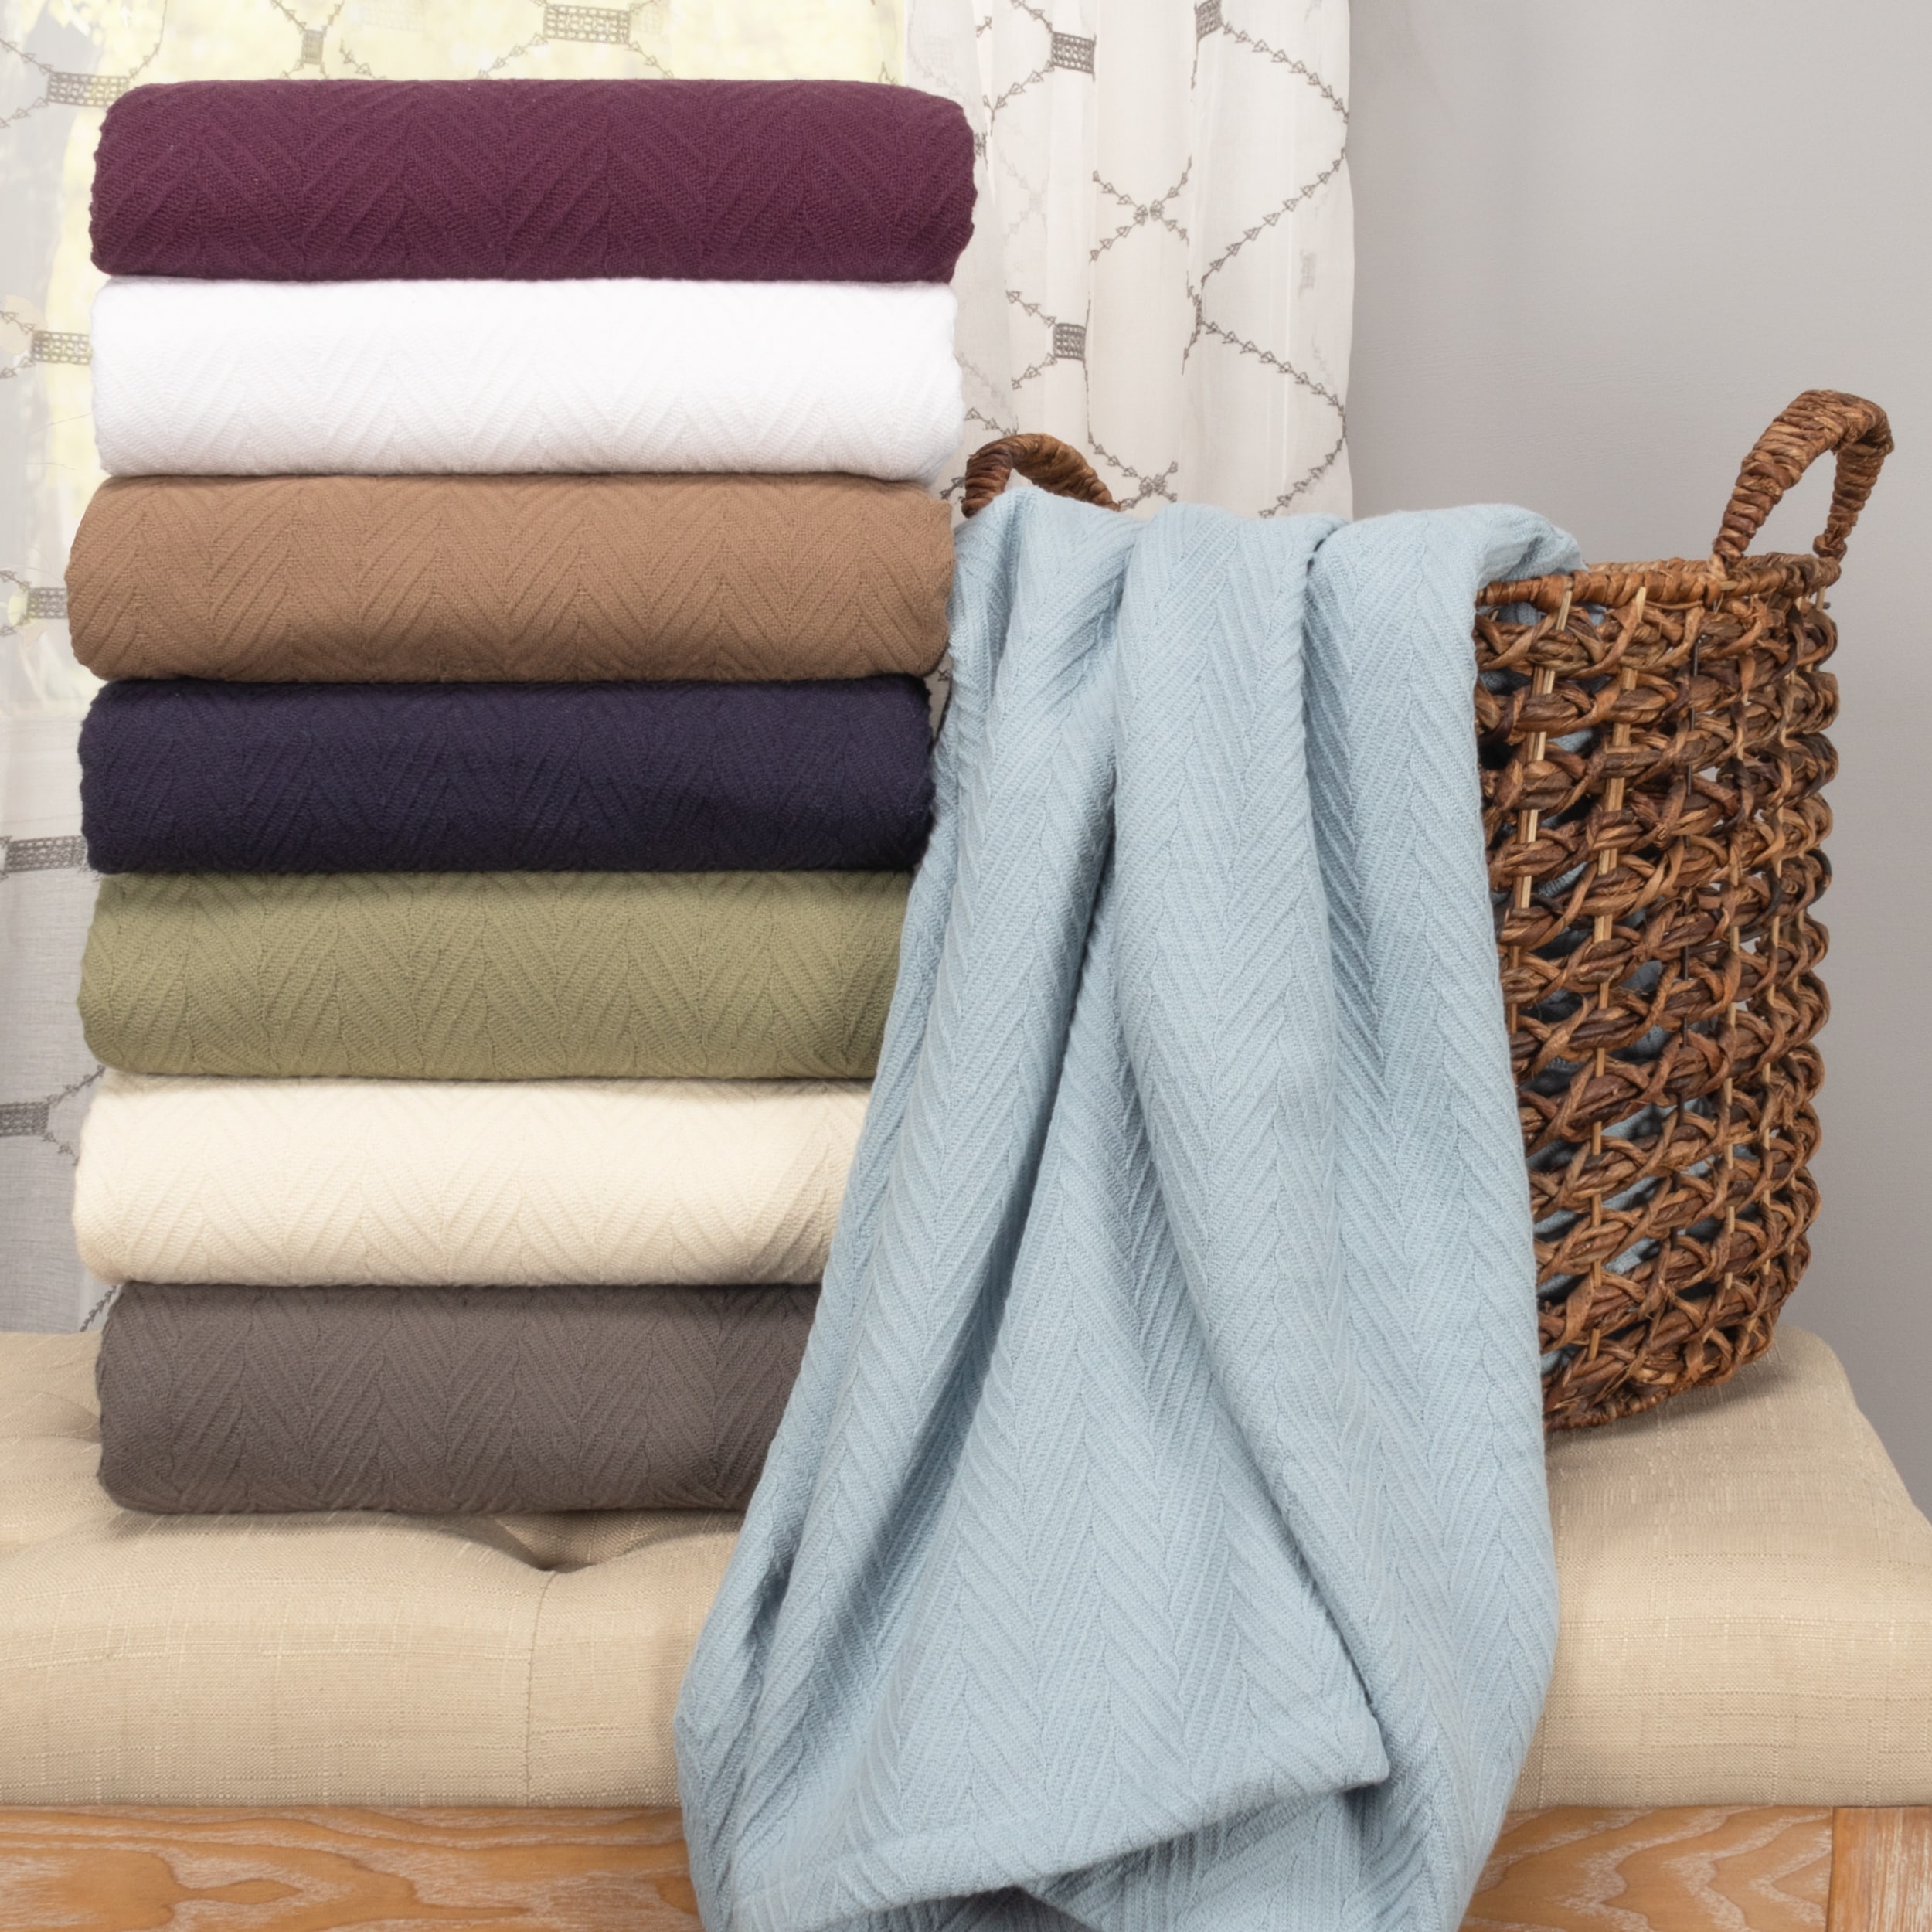 Hotel Style 58L x 30W Egyptian Cotton Bath Towels, Arctic White, 2 Pack, Size: 2 Piece Bath Sheet Set